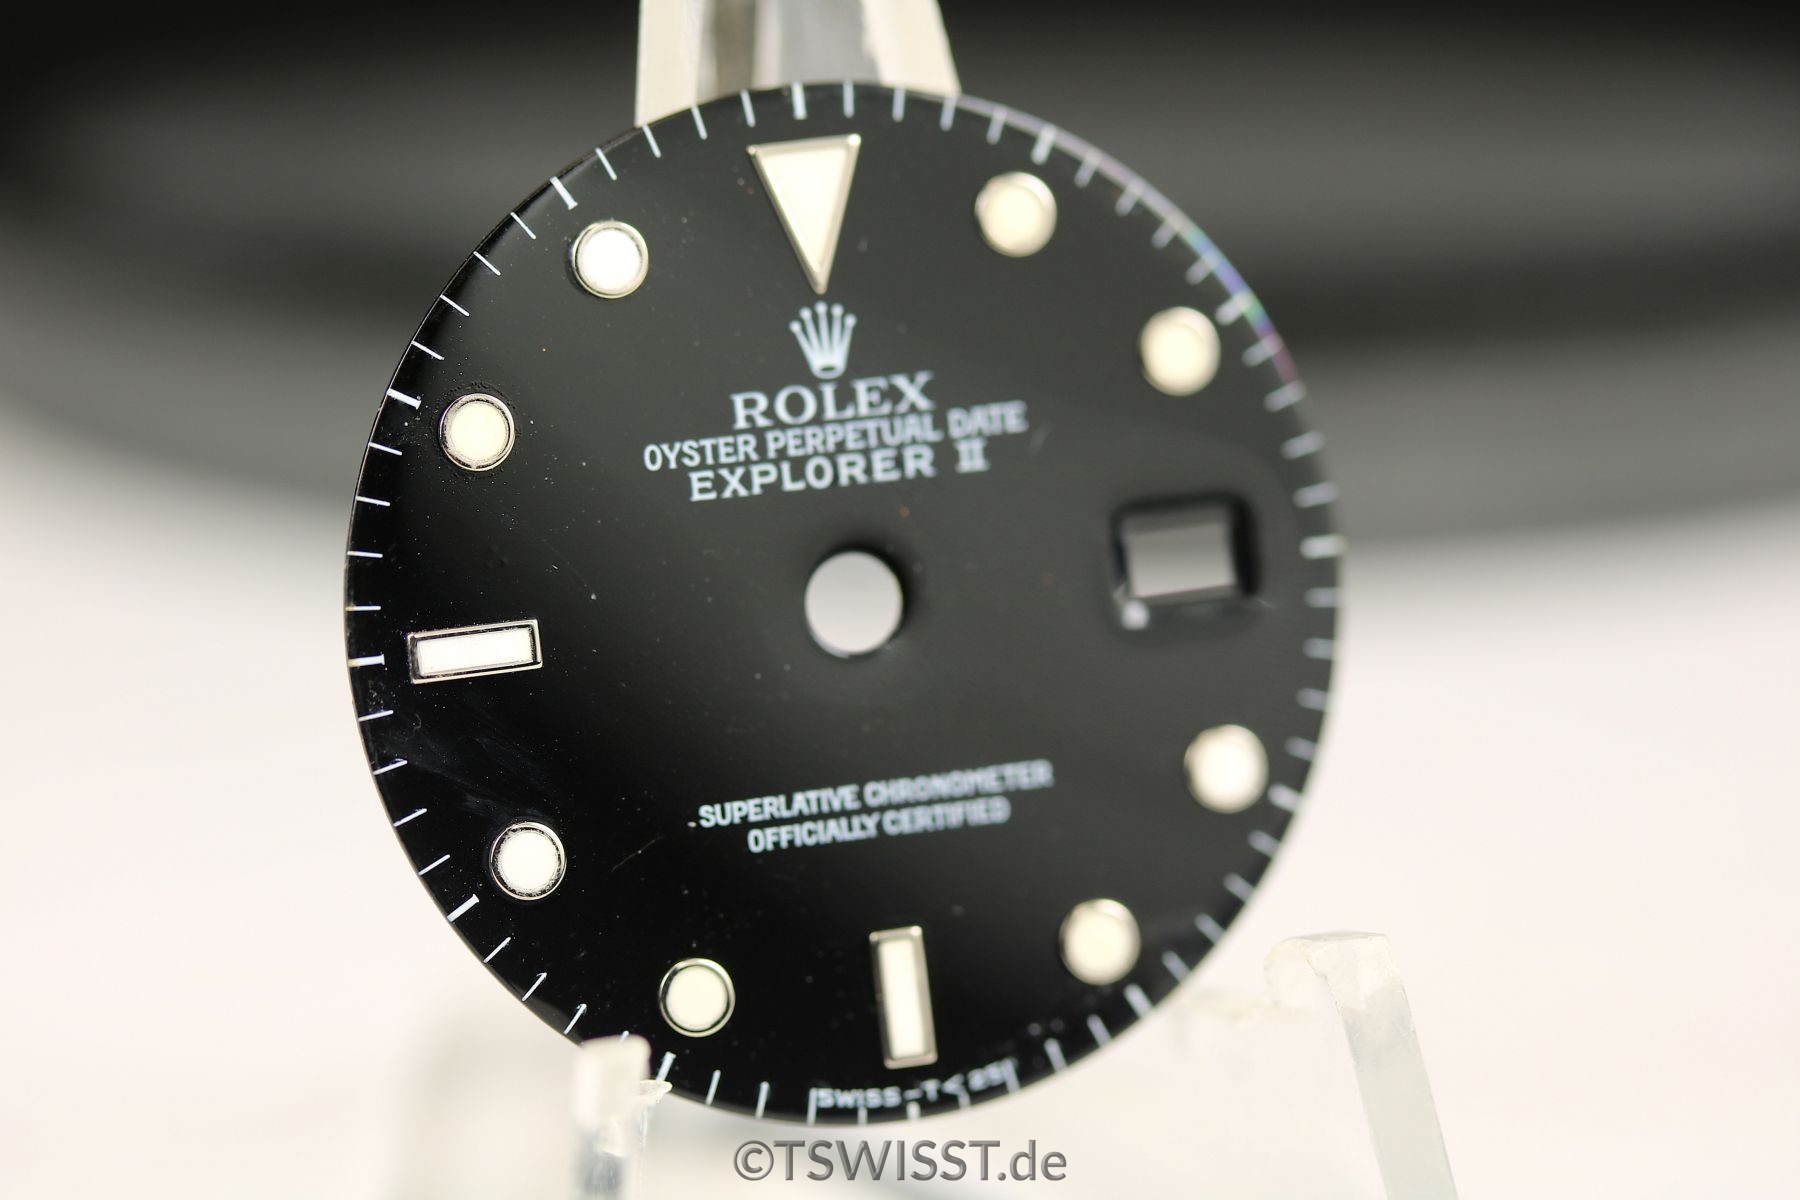 Rolex Explorer II 16570 dial